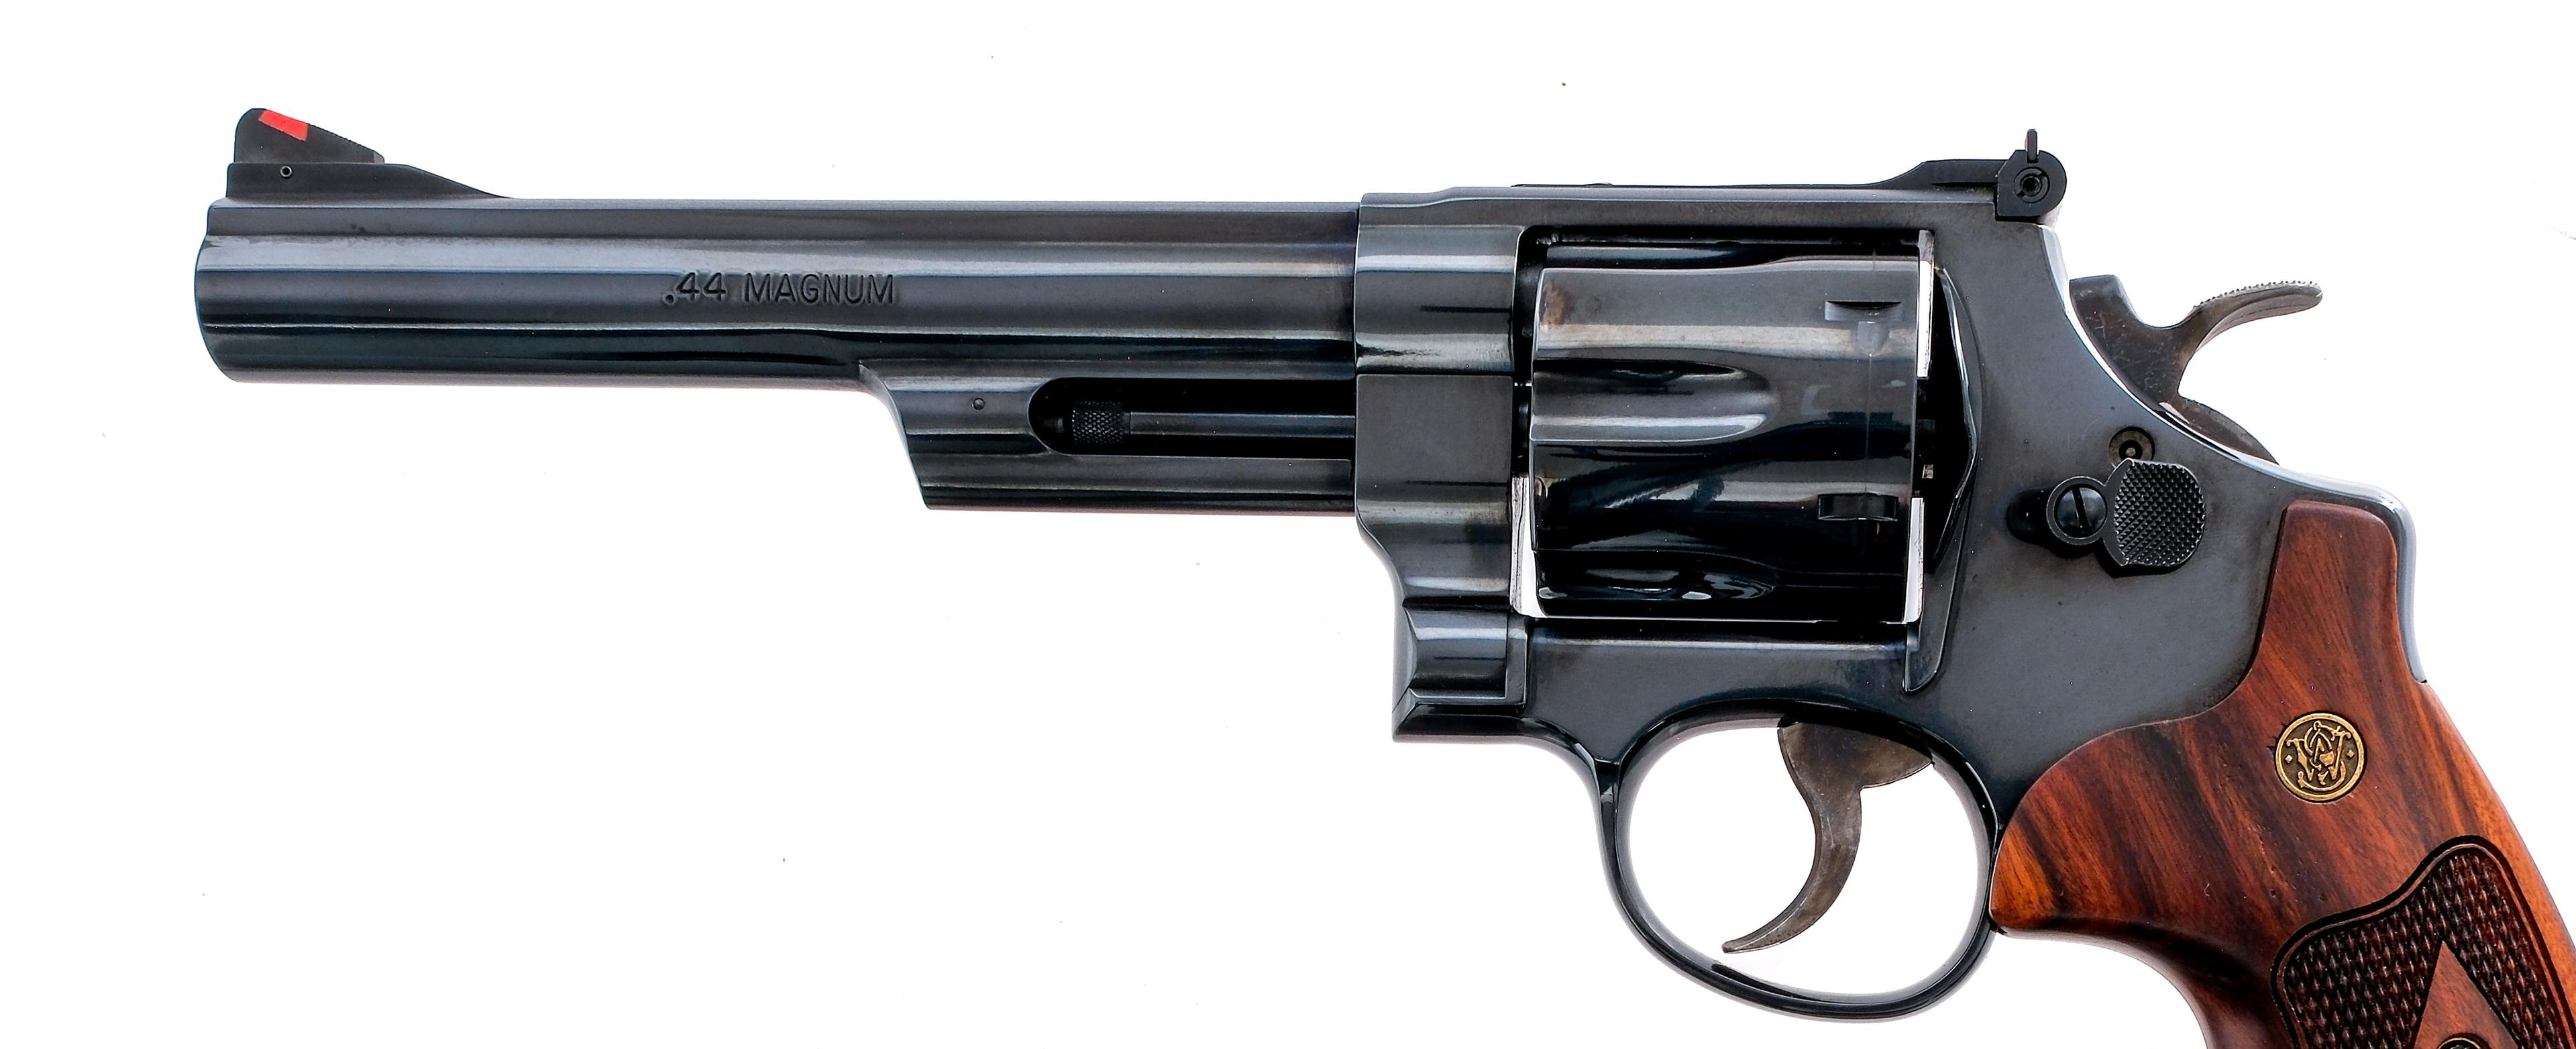 Smith & Wesson 29-10 .44 Magnum Revolver